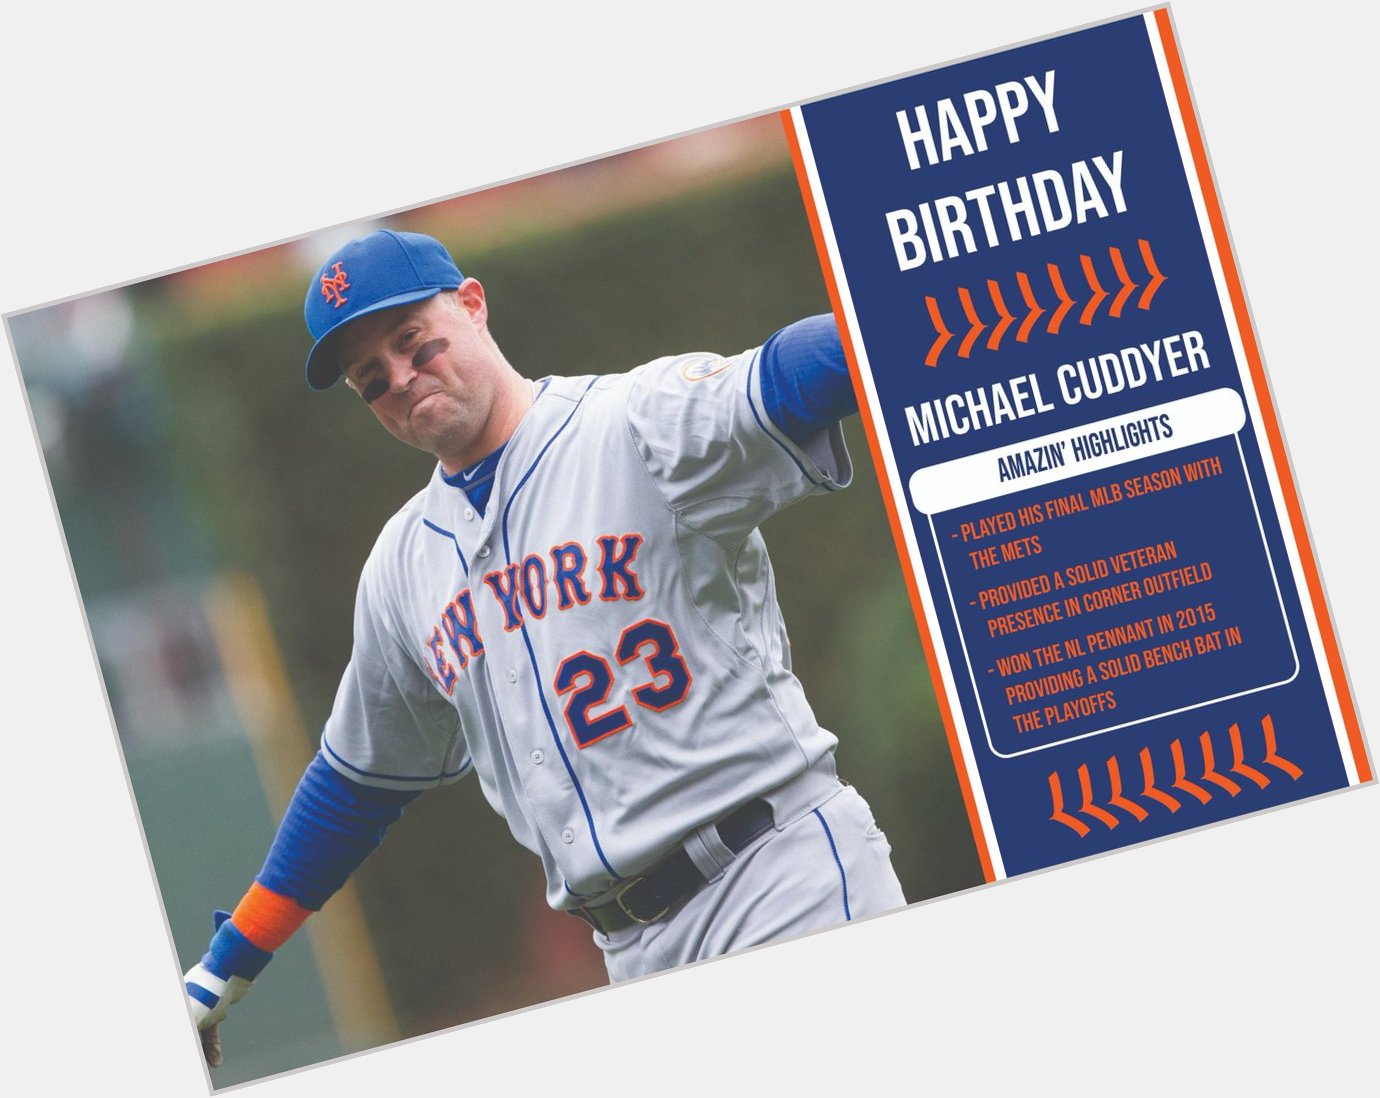  Happy Birthday to Michael Cuddyer! 